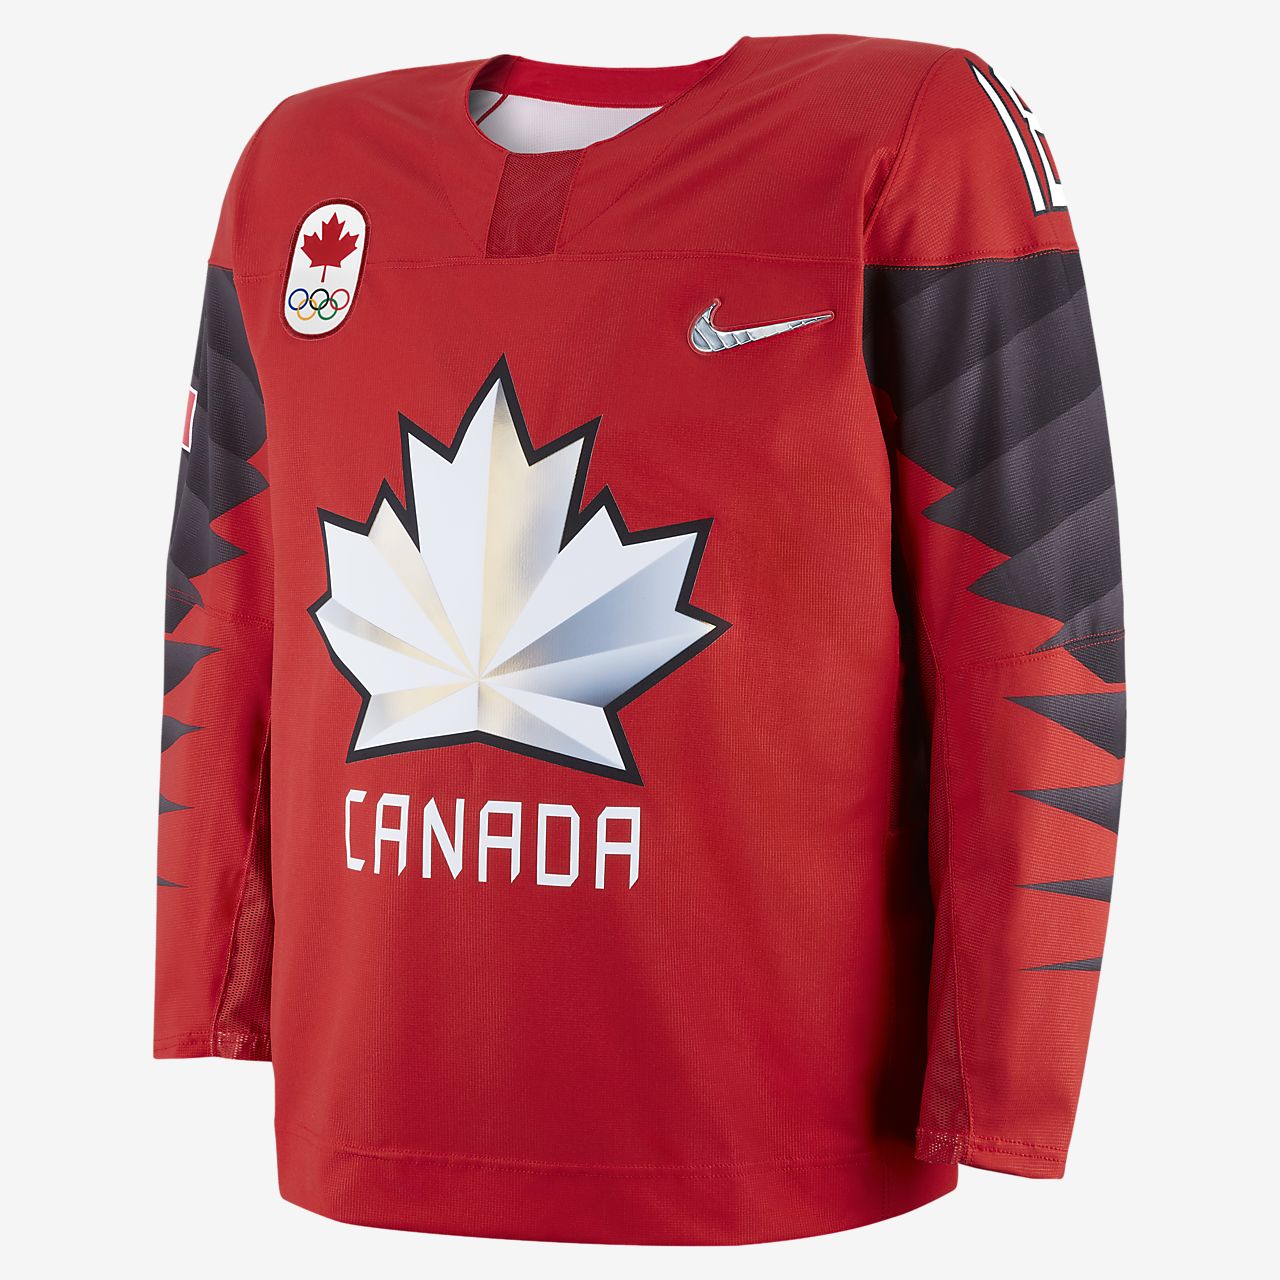 Download Nike Team Canada Replica Men's Hockey Jersey. Nike.com